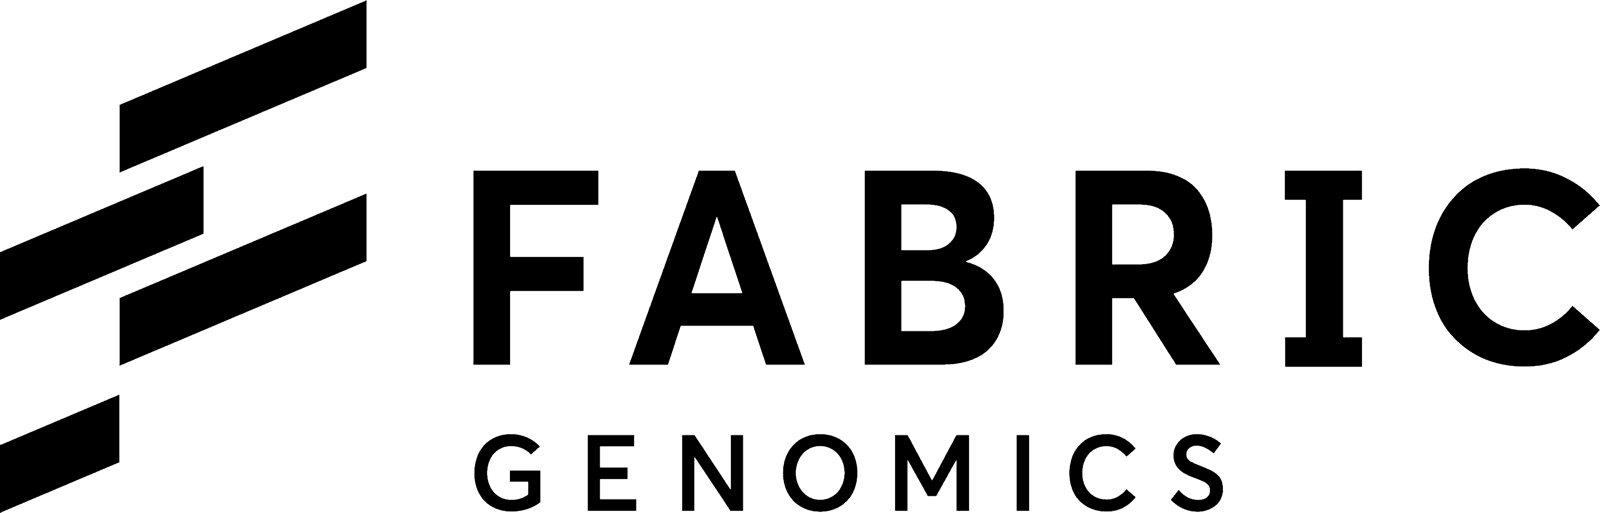 Fabric Genomics-logo